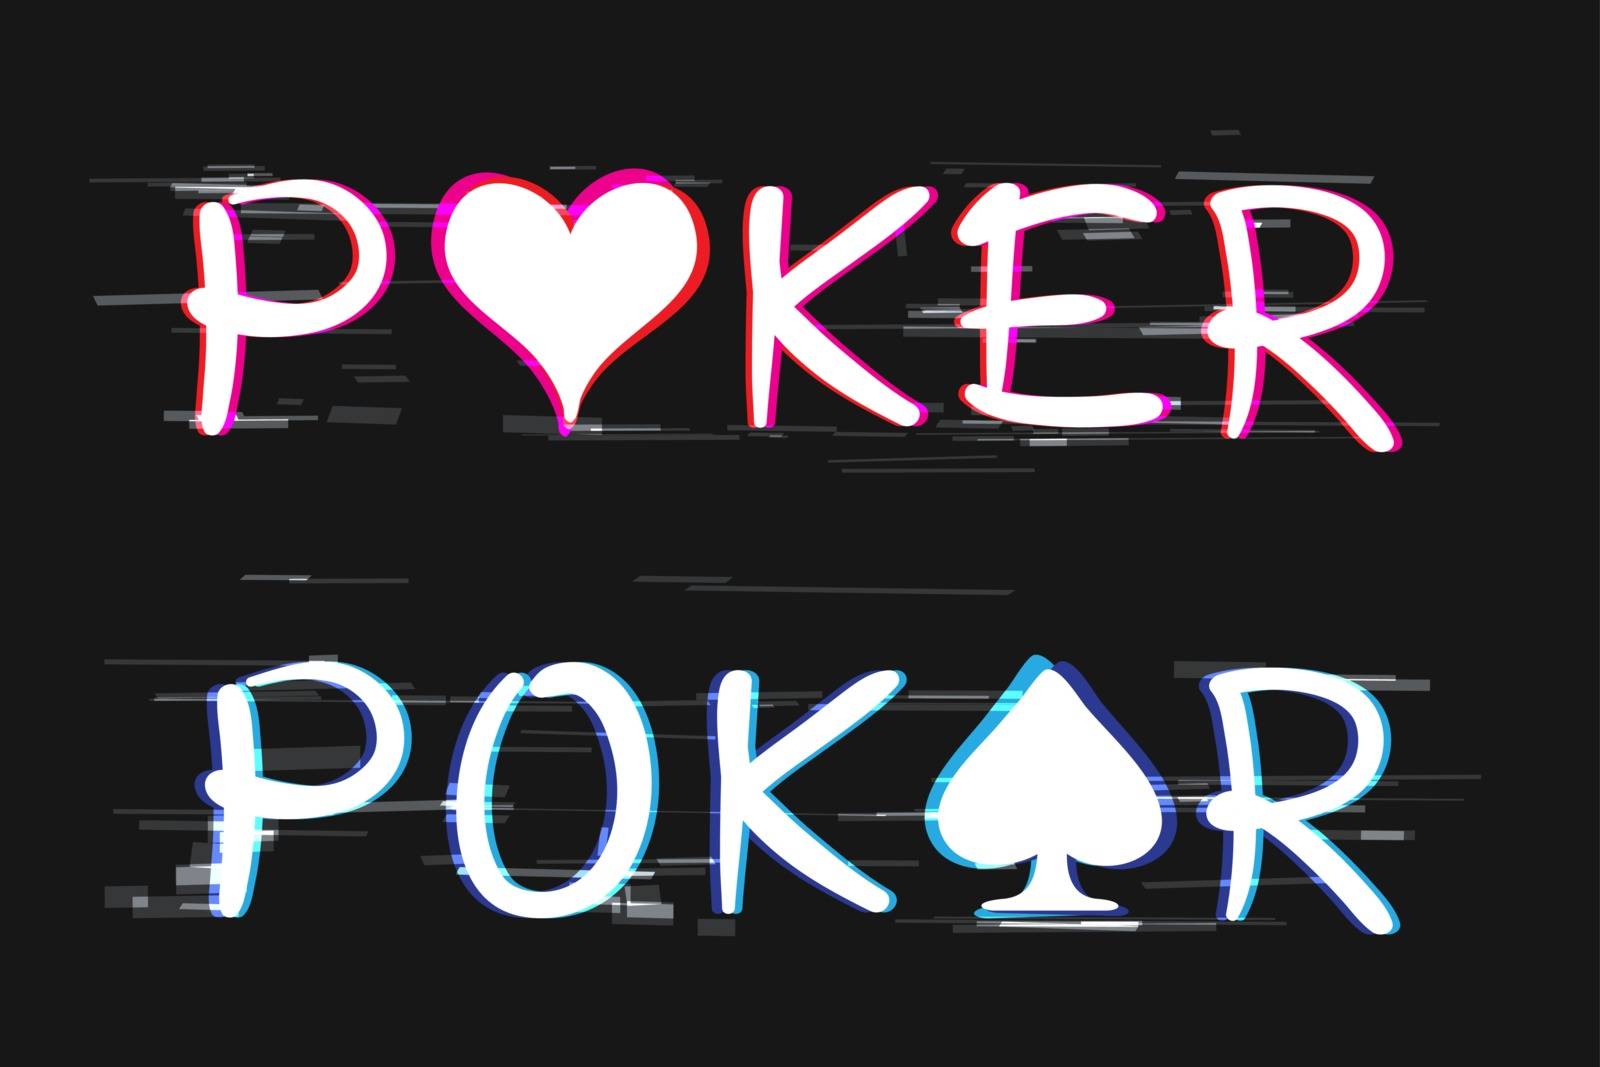 Glitch poker logo text on dark background. Playing casino poker sign symbol in black backdrop